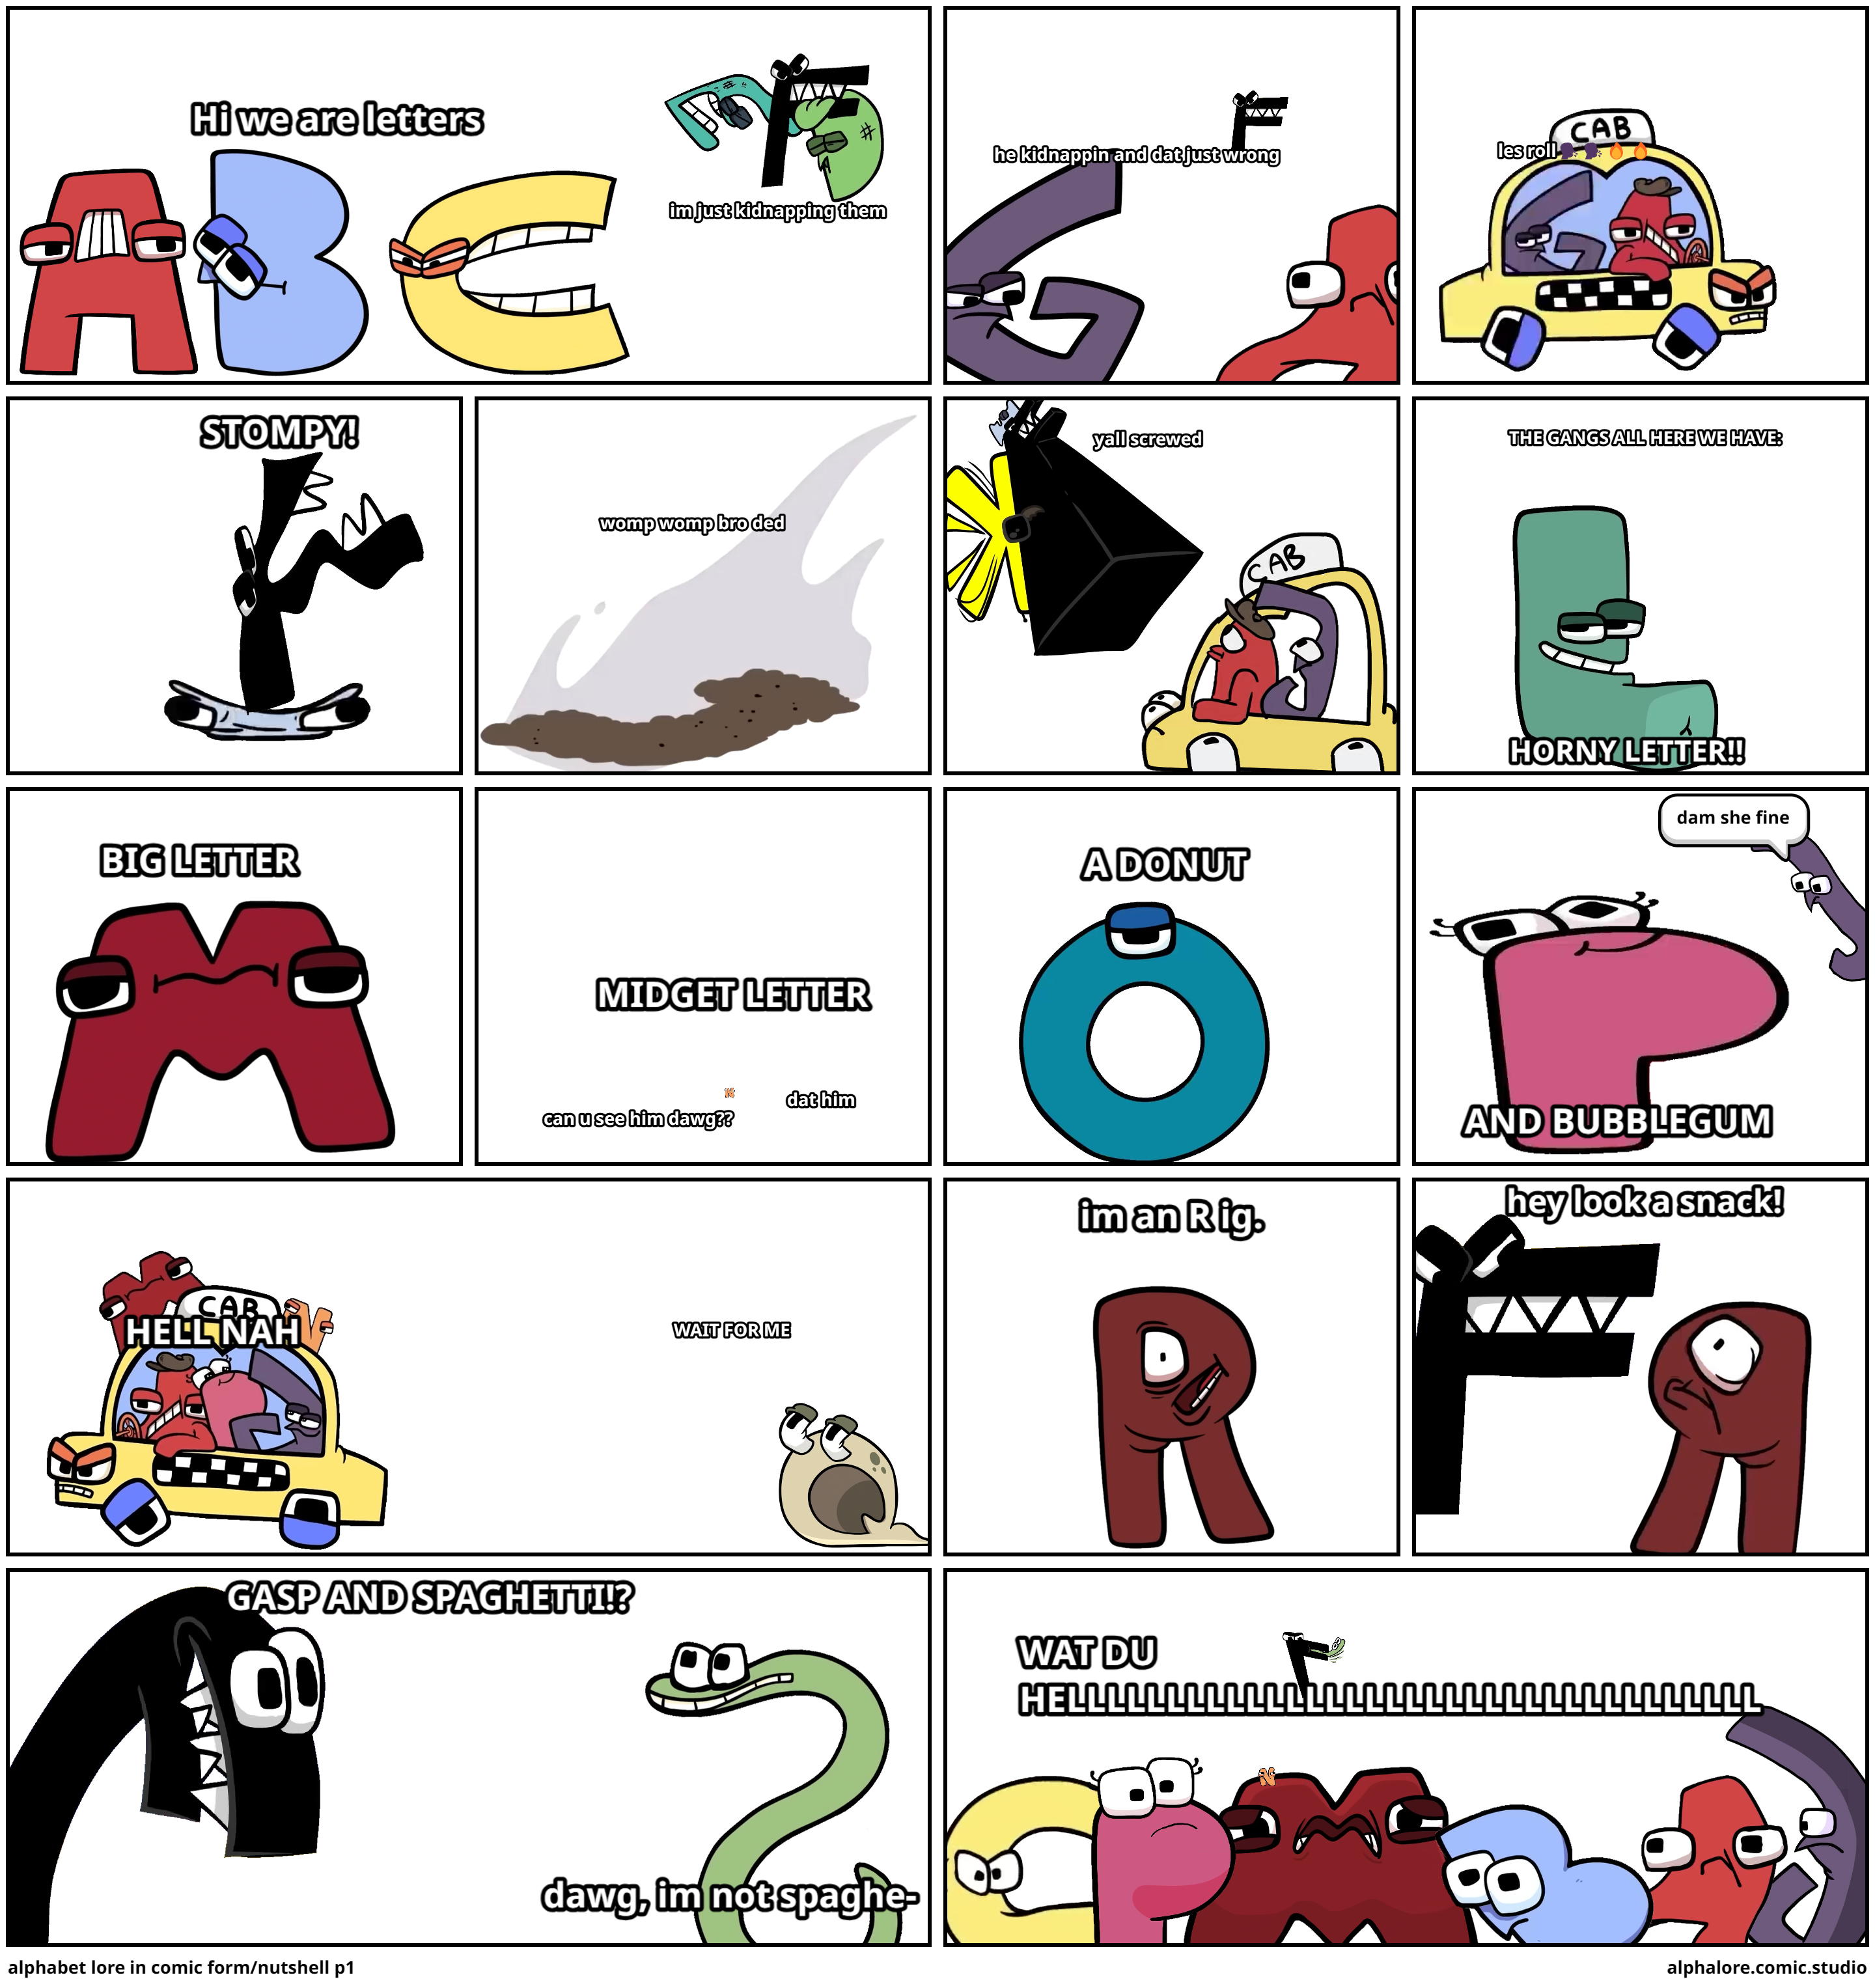 alphabet lore in comic form/nutshell p1